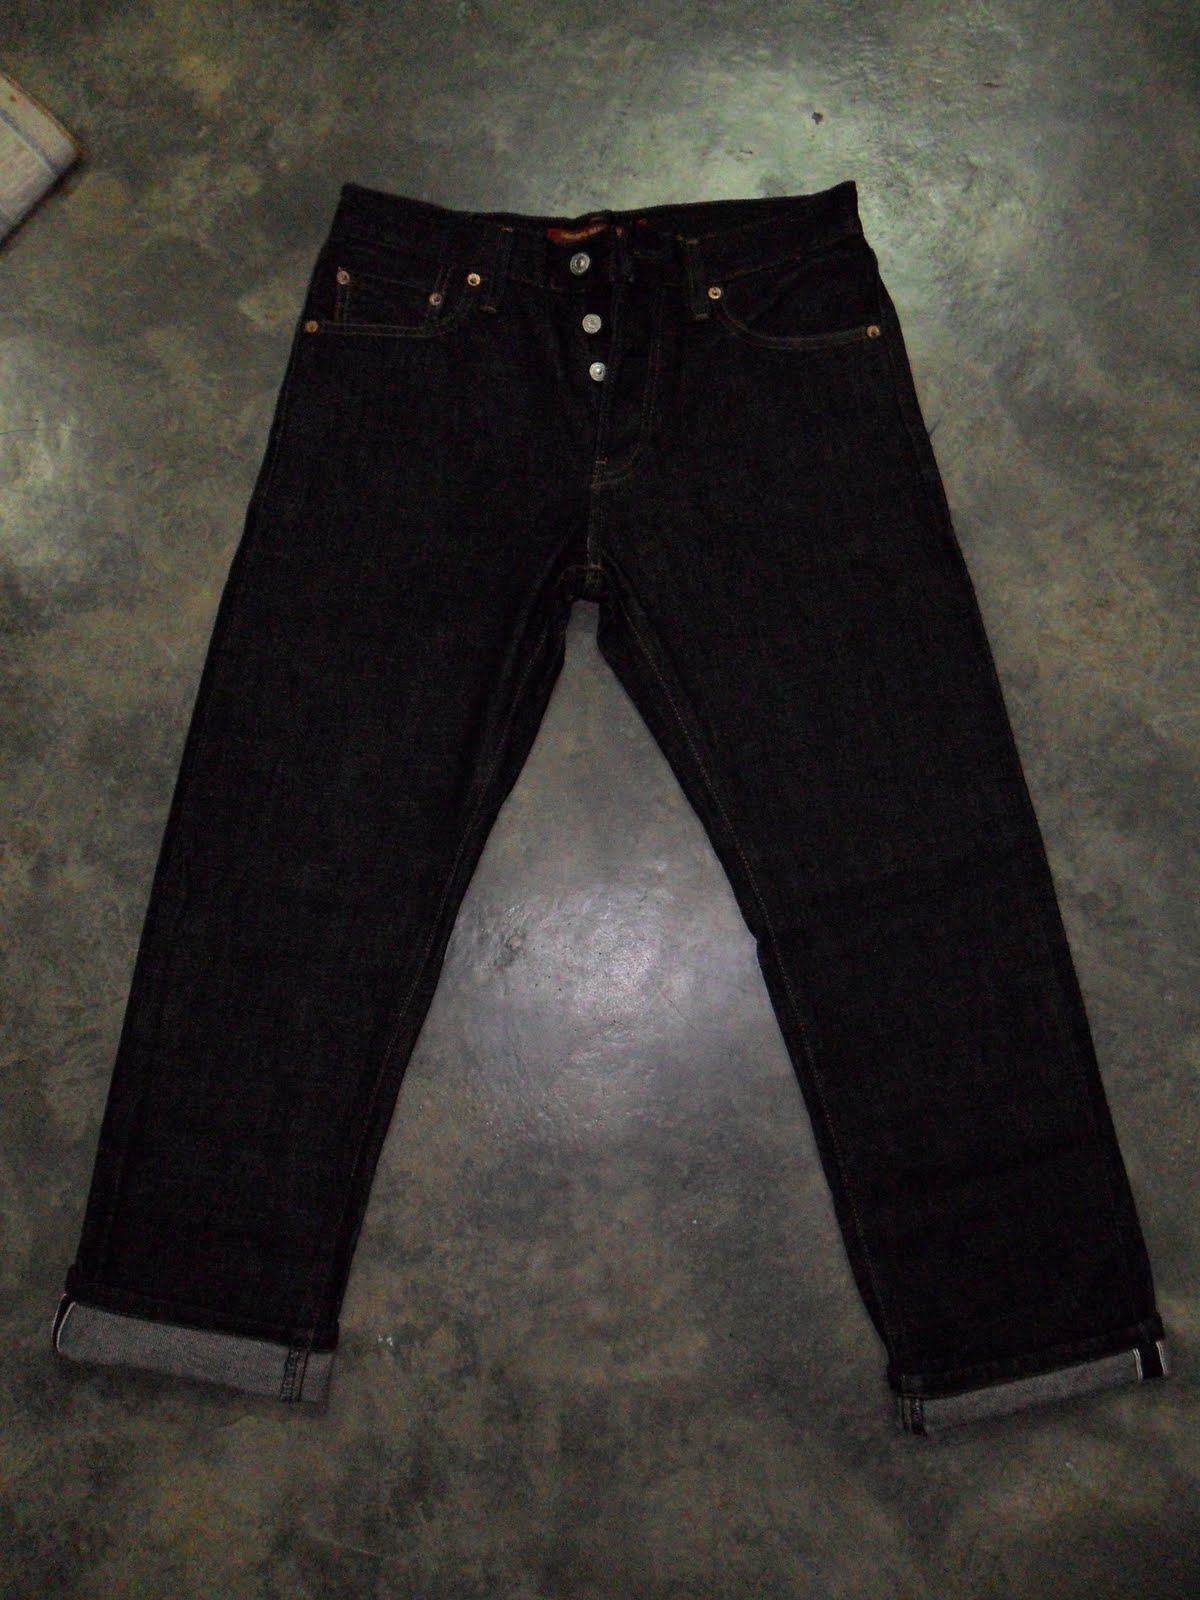 BUNDLEBARANGBAEK: Uniqlo s-002 selvedge jeans